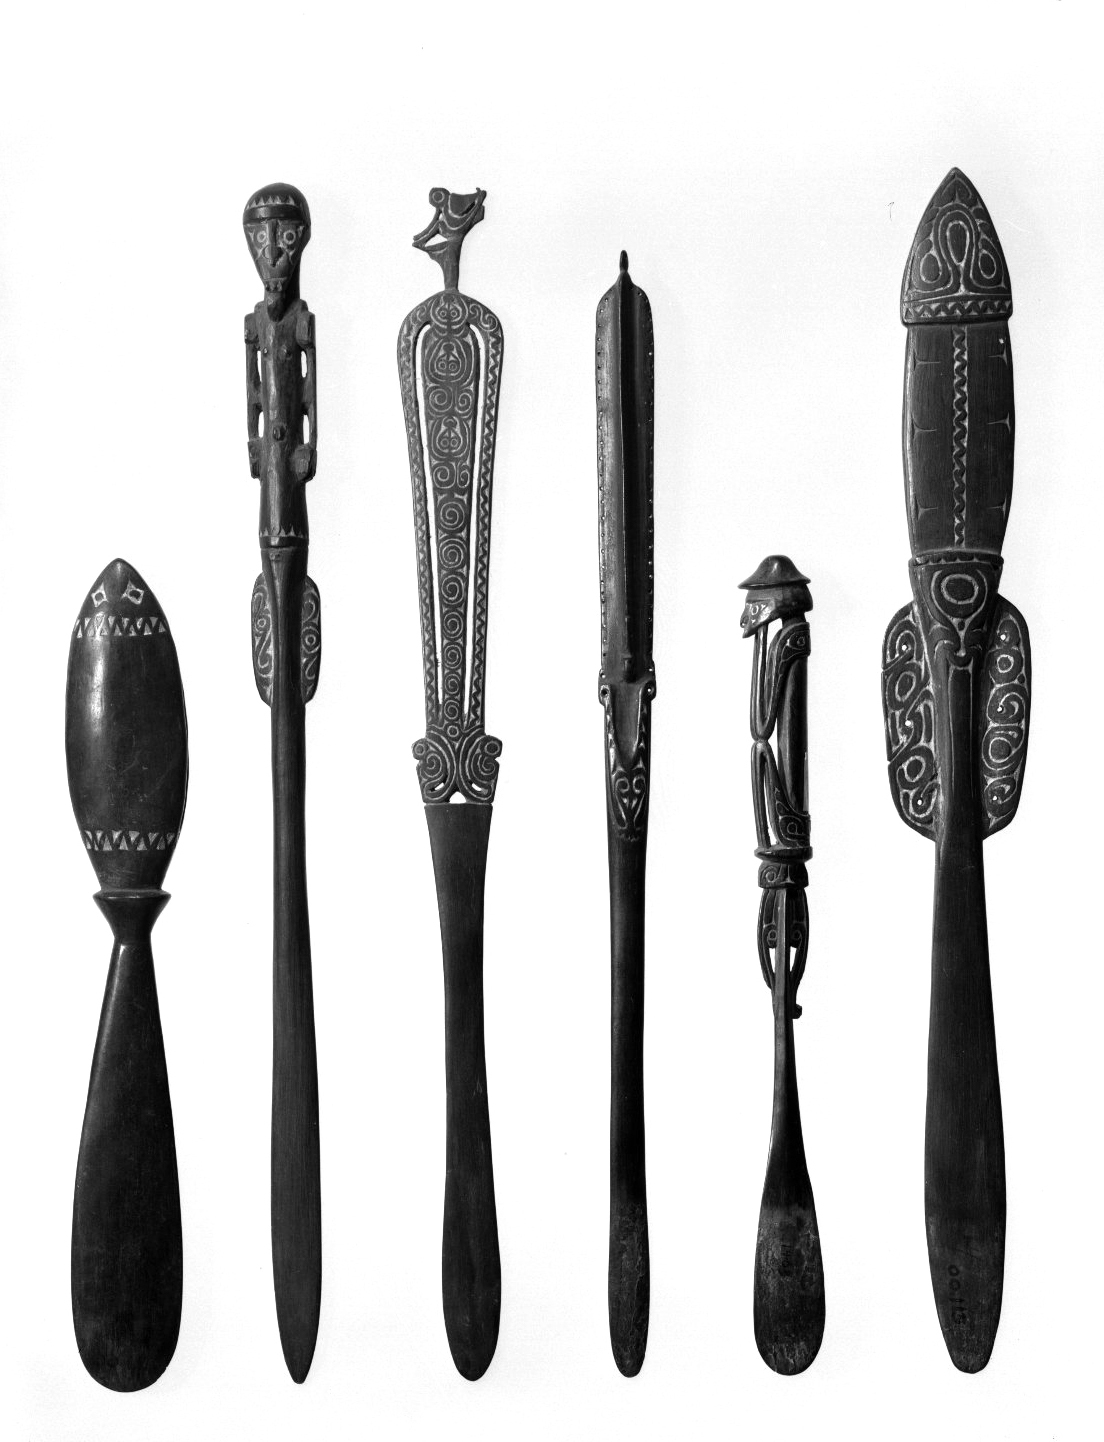 Lime spatula (kena), twentieth century